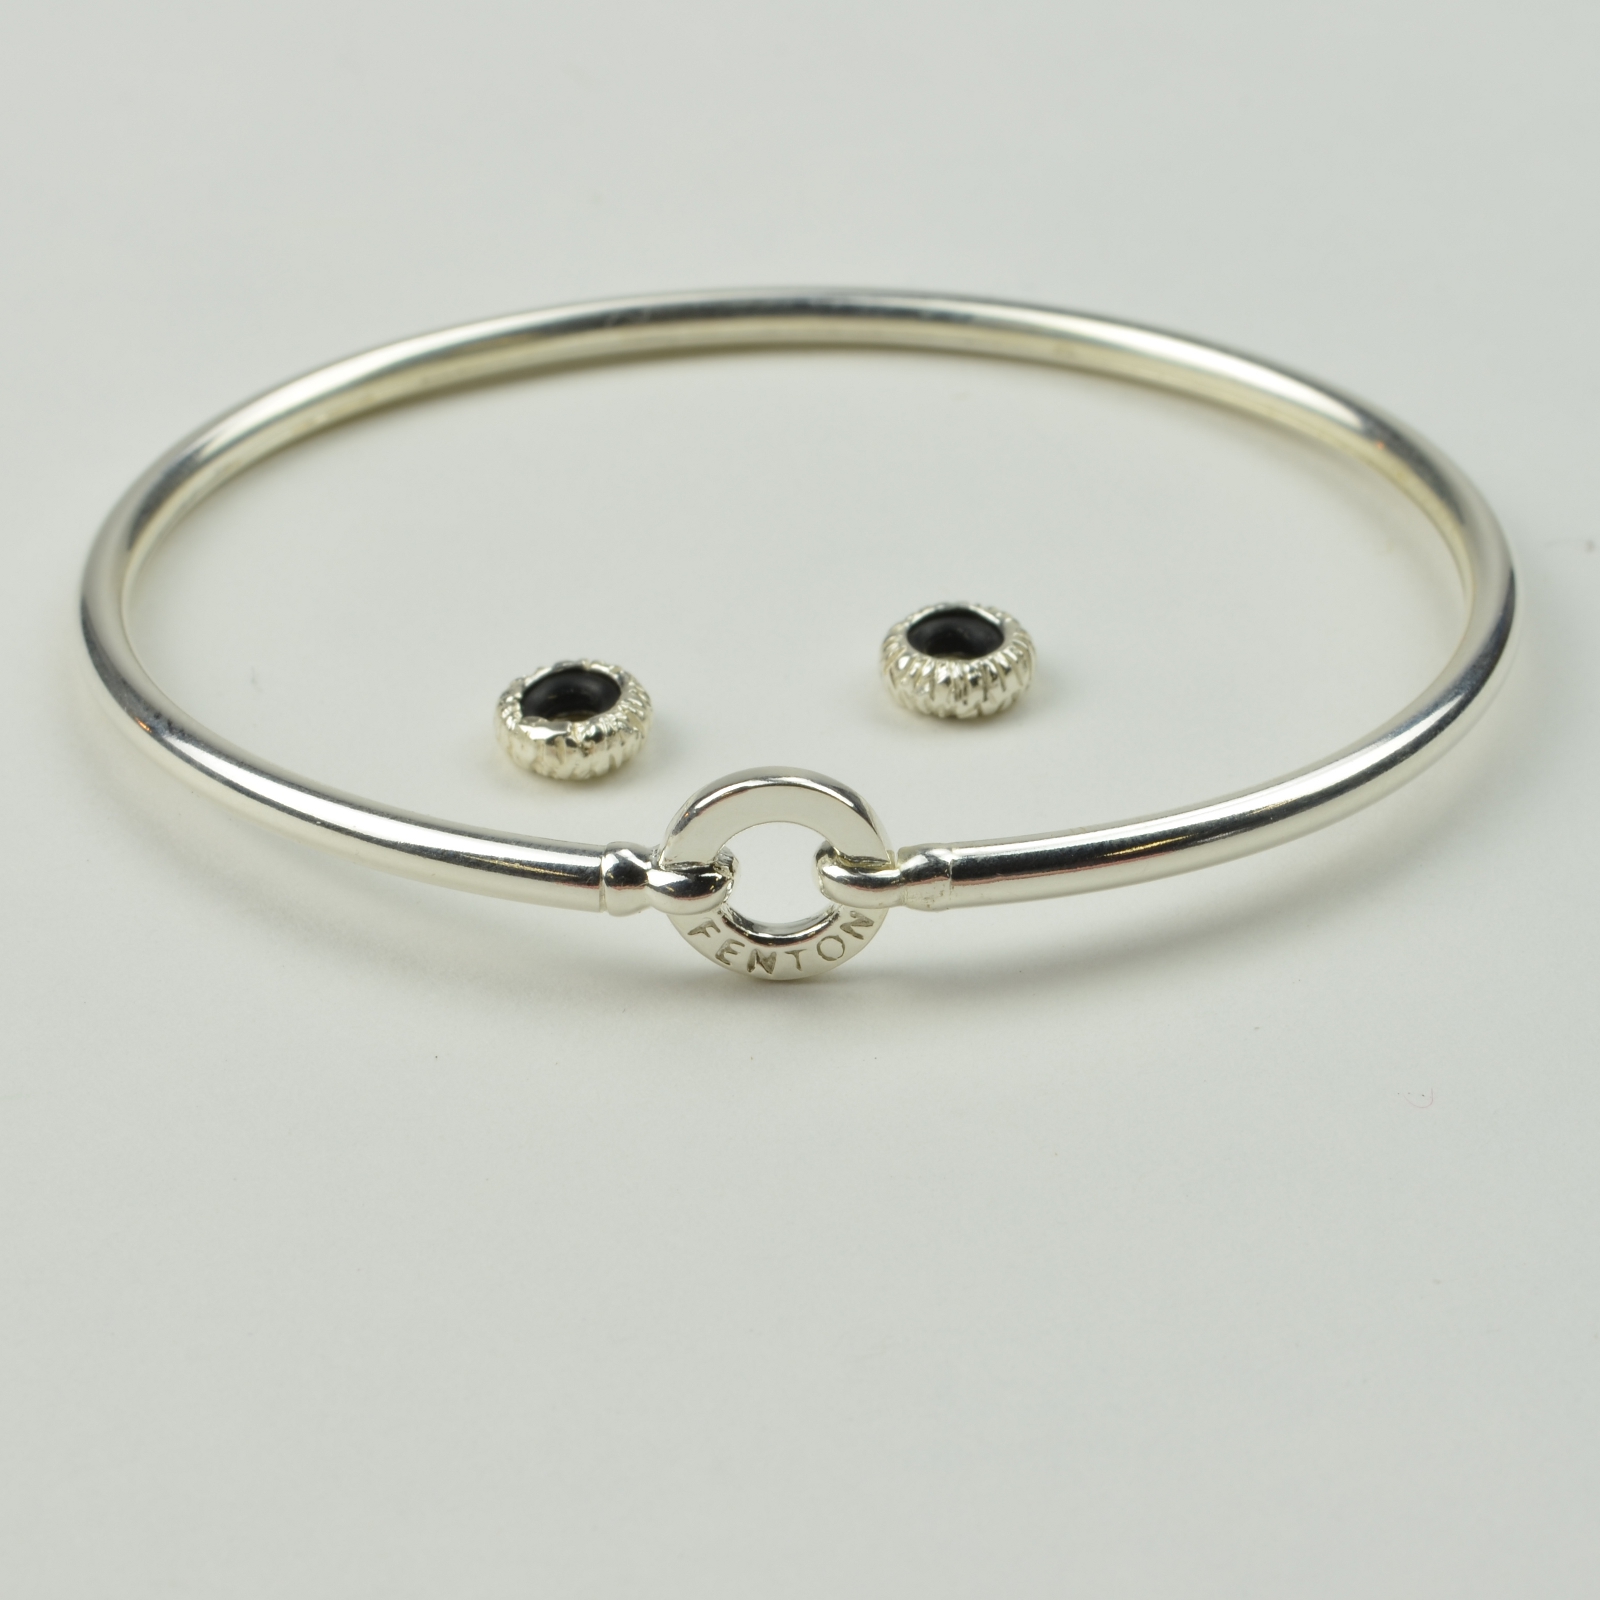 Buy Mytys Fashion Silver Marcasite Bangle Bracelets for Women Girls,  Vintage Rose Flower Design Cuff Bracelet Jewelry Gift, 7